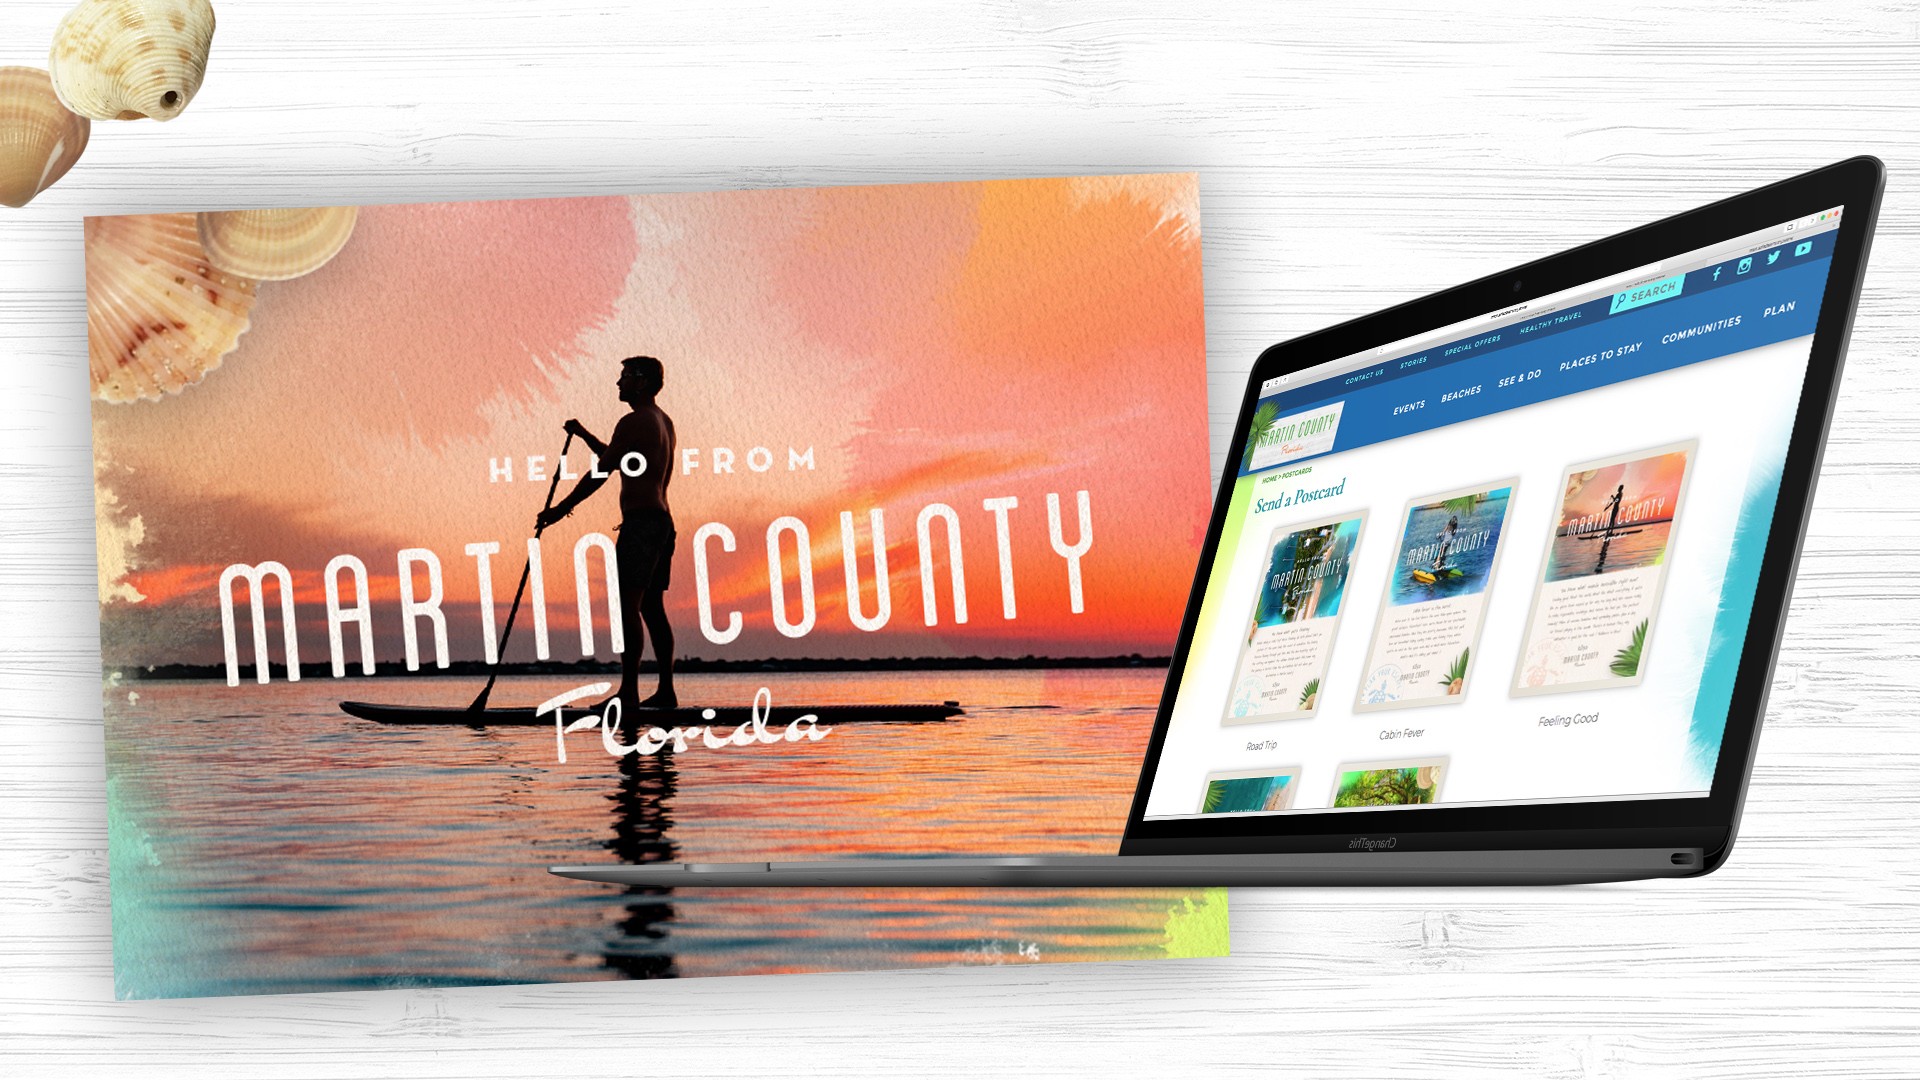 Branding and creative for Martin County, Florida